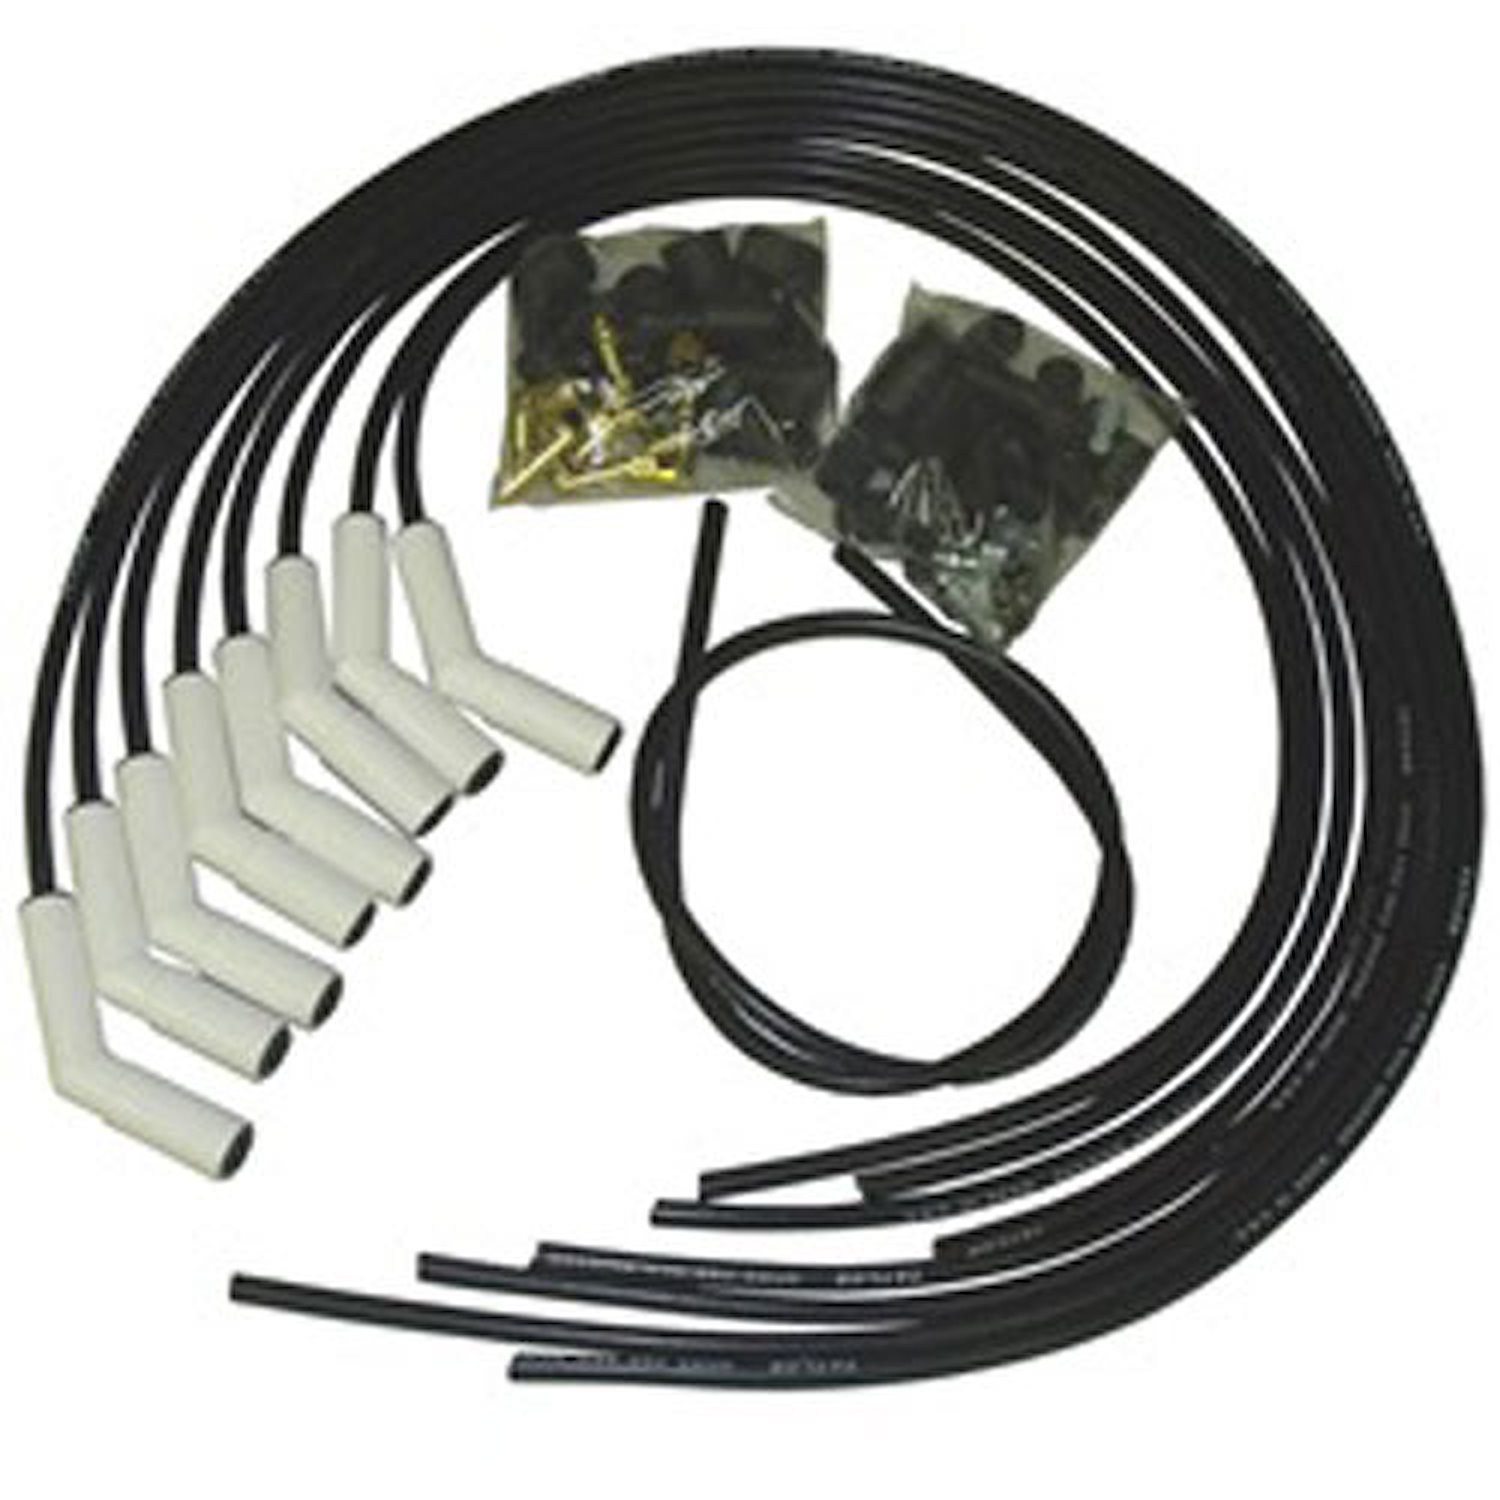 Spiro Pro Ignition Wire Set 8 mm. Ceramic Boot Universal Wire Set 135 deg. Black